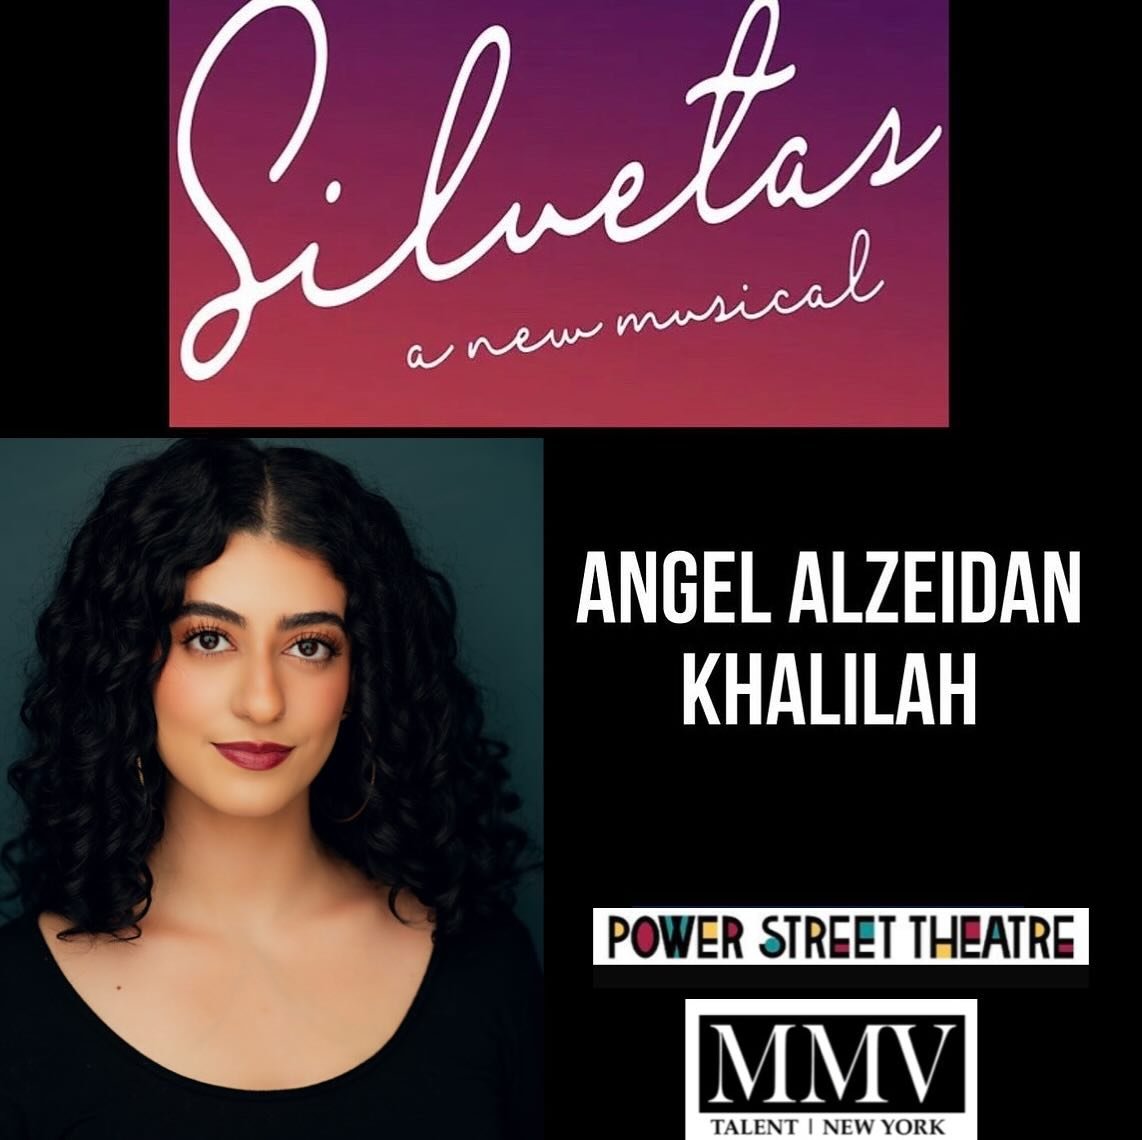 ANGEL ALZEIDAN is heading to Philly to shine in the world premier of Siluetas.

@angelalzeidan__ 
#mmvtalent